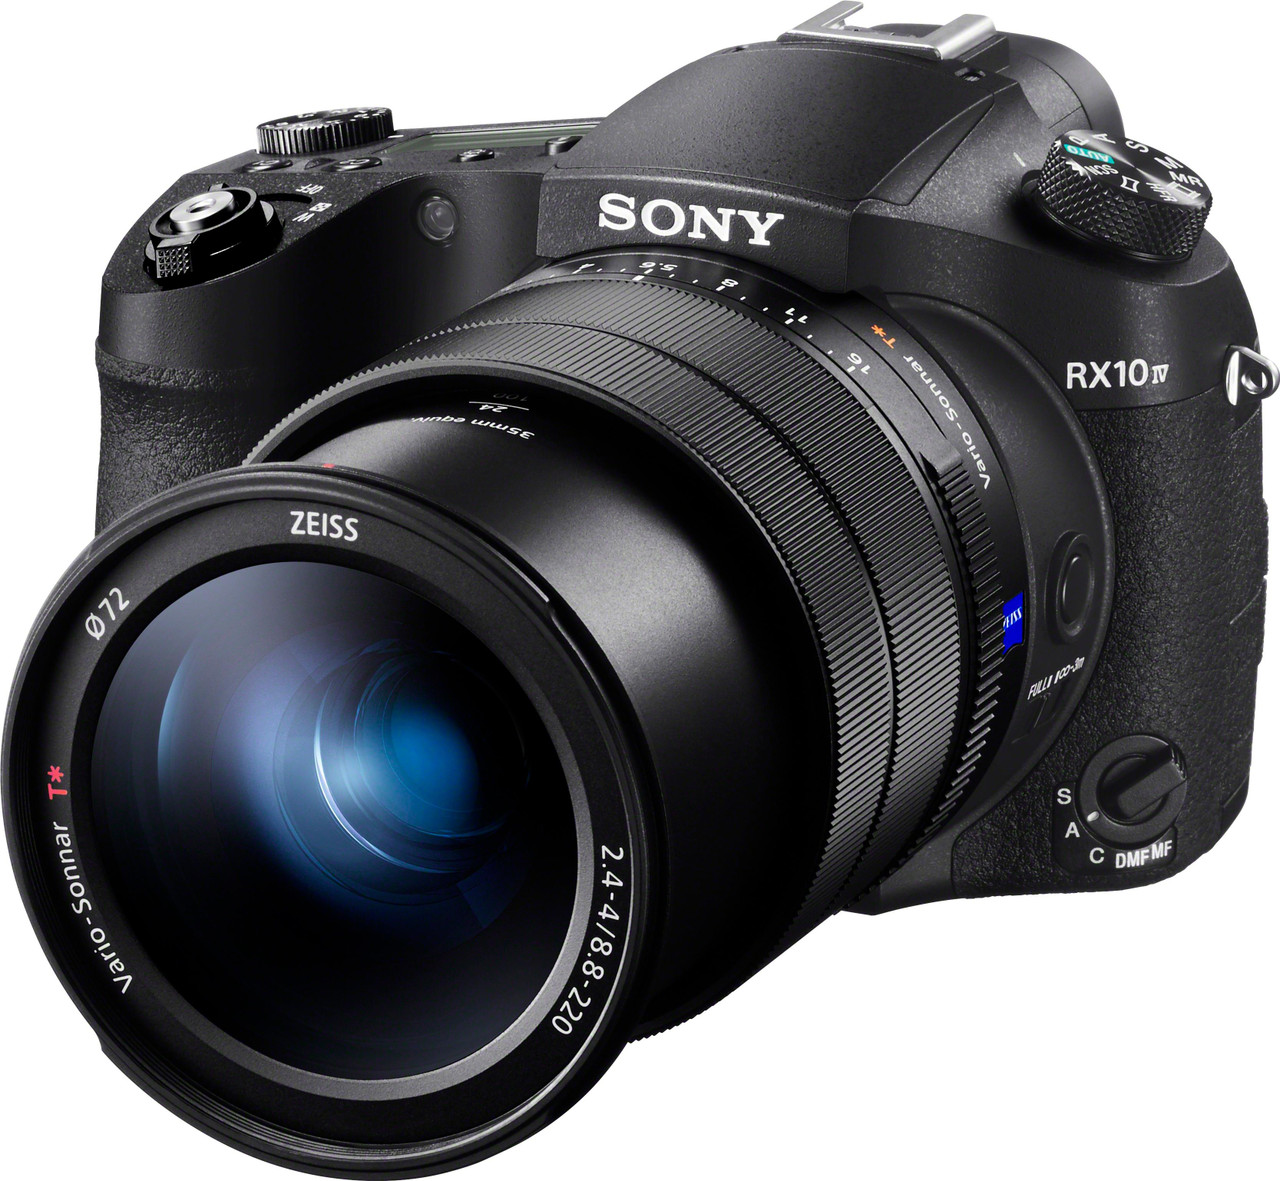 Sony - Cyber-shot RX10 IV 20.1-Megapixel Digital Camera